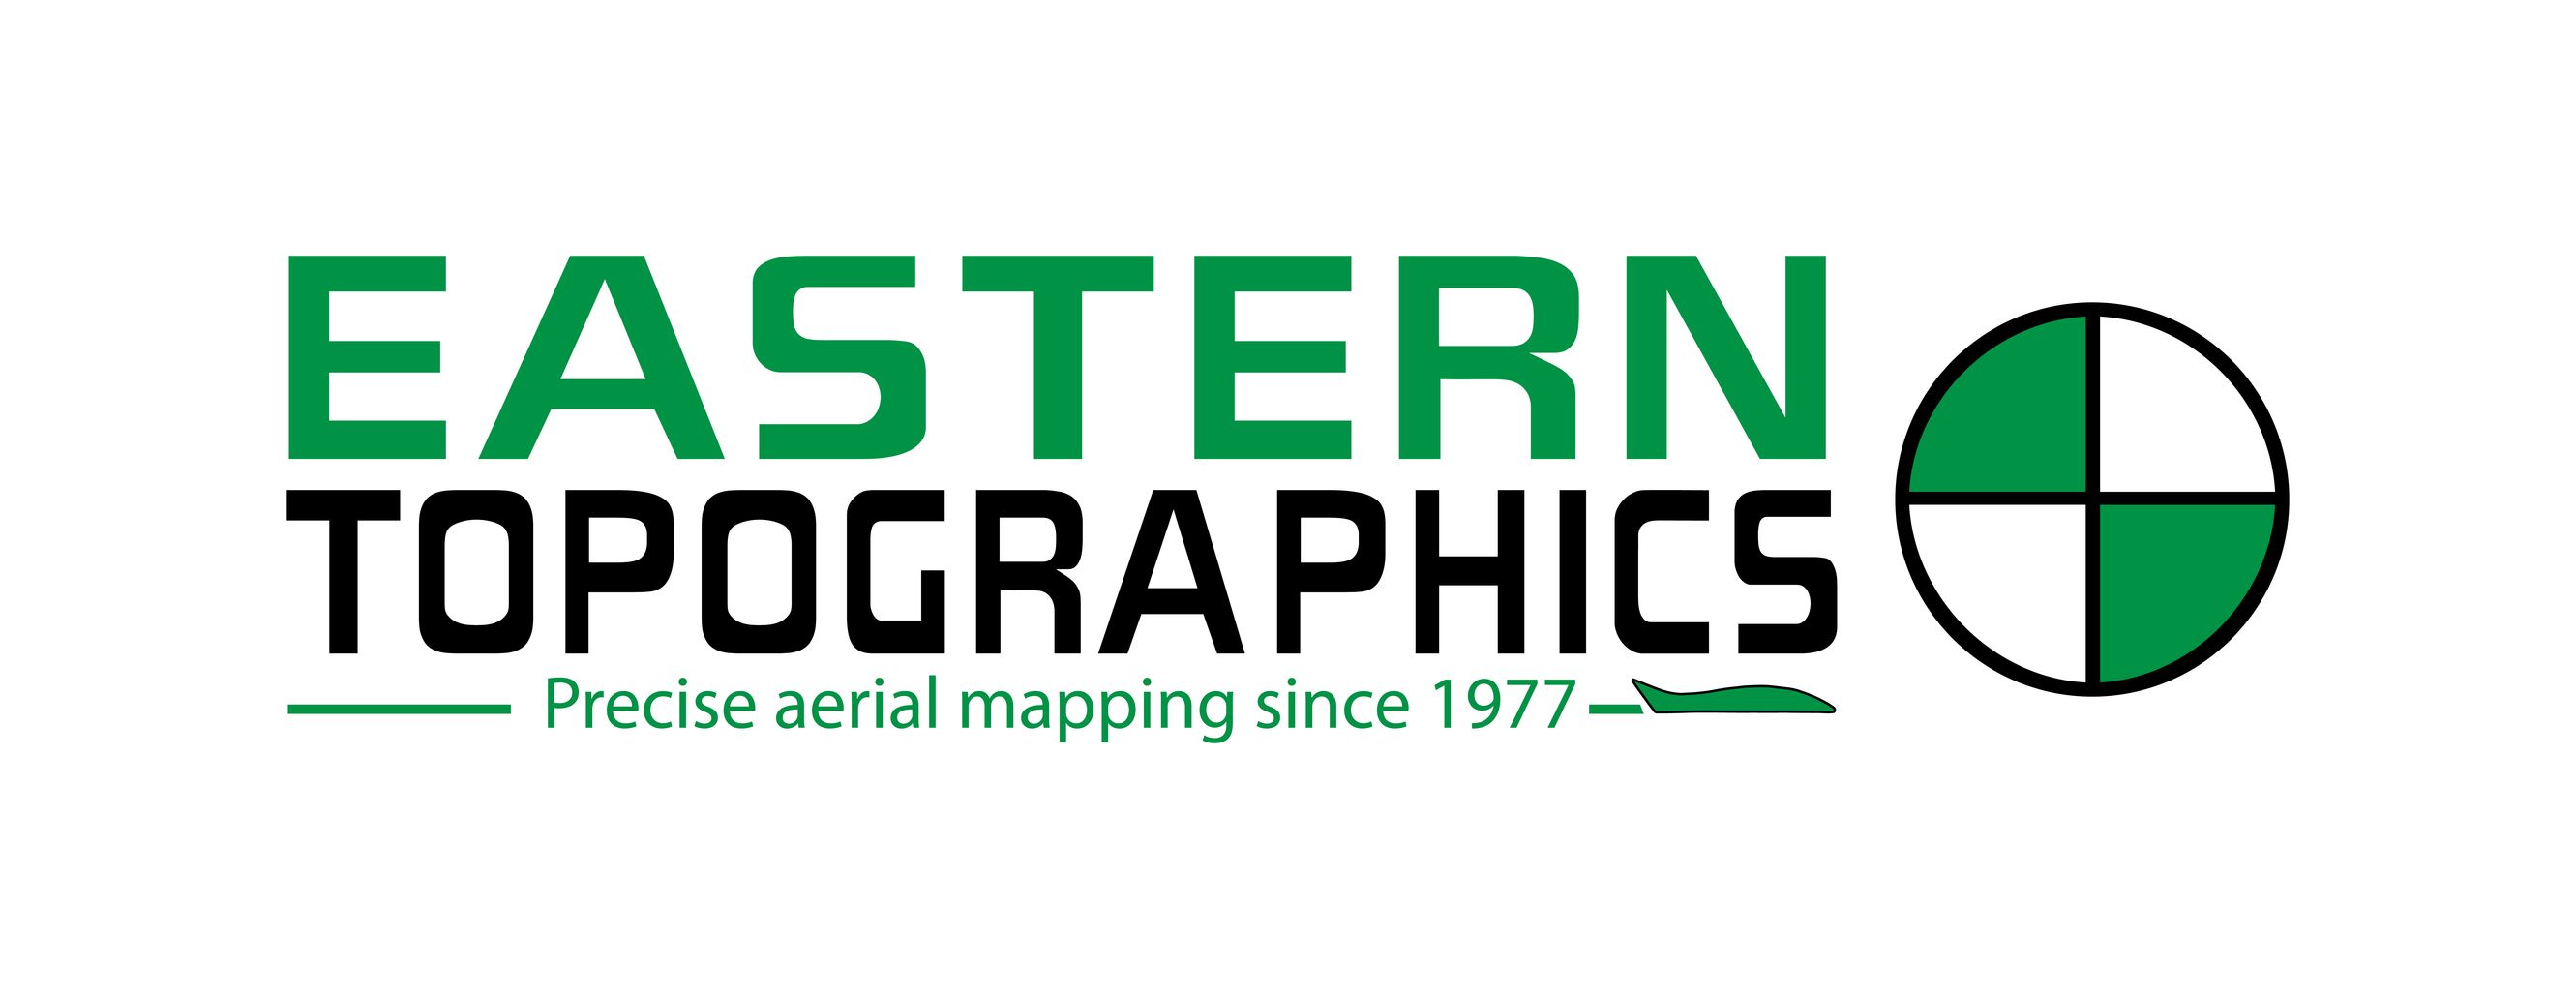 Eastern Topographics